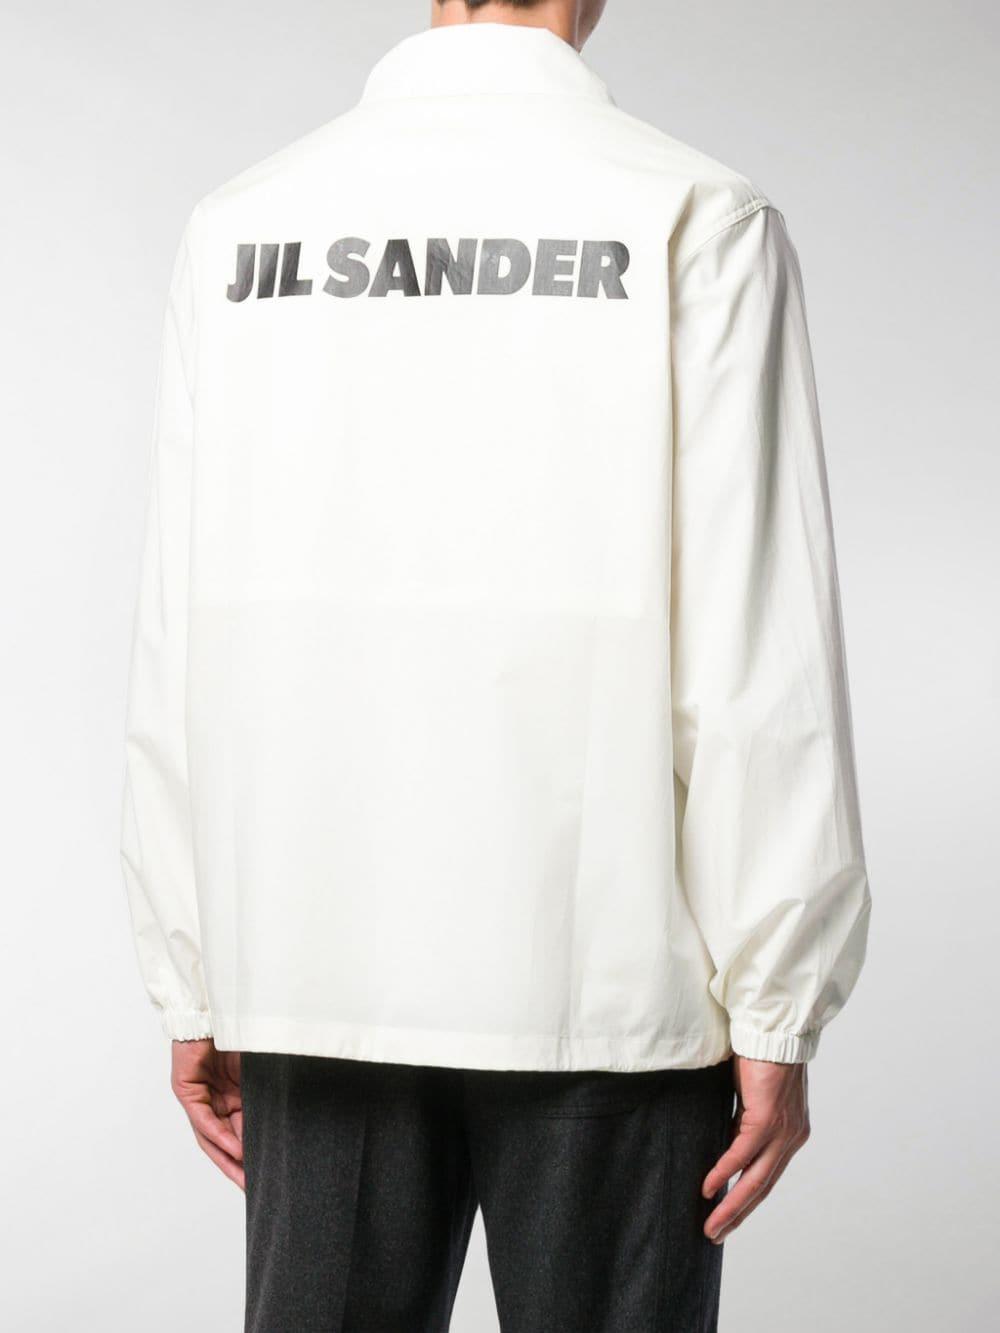 Jil Sander Logo Printed Shirt Jacket in White for Men - Lyst